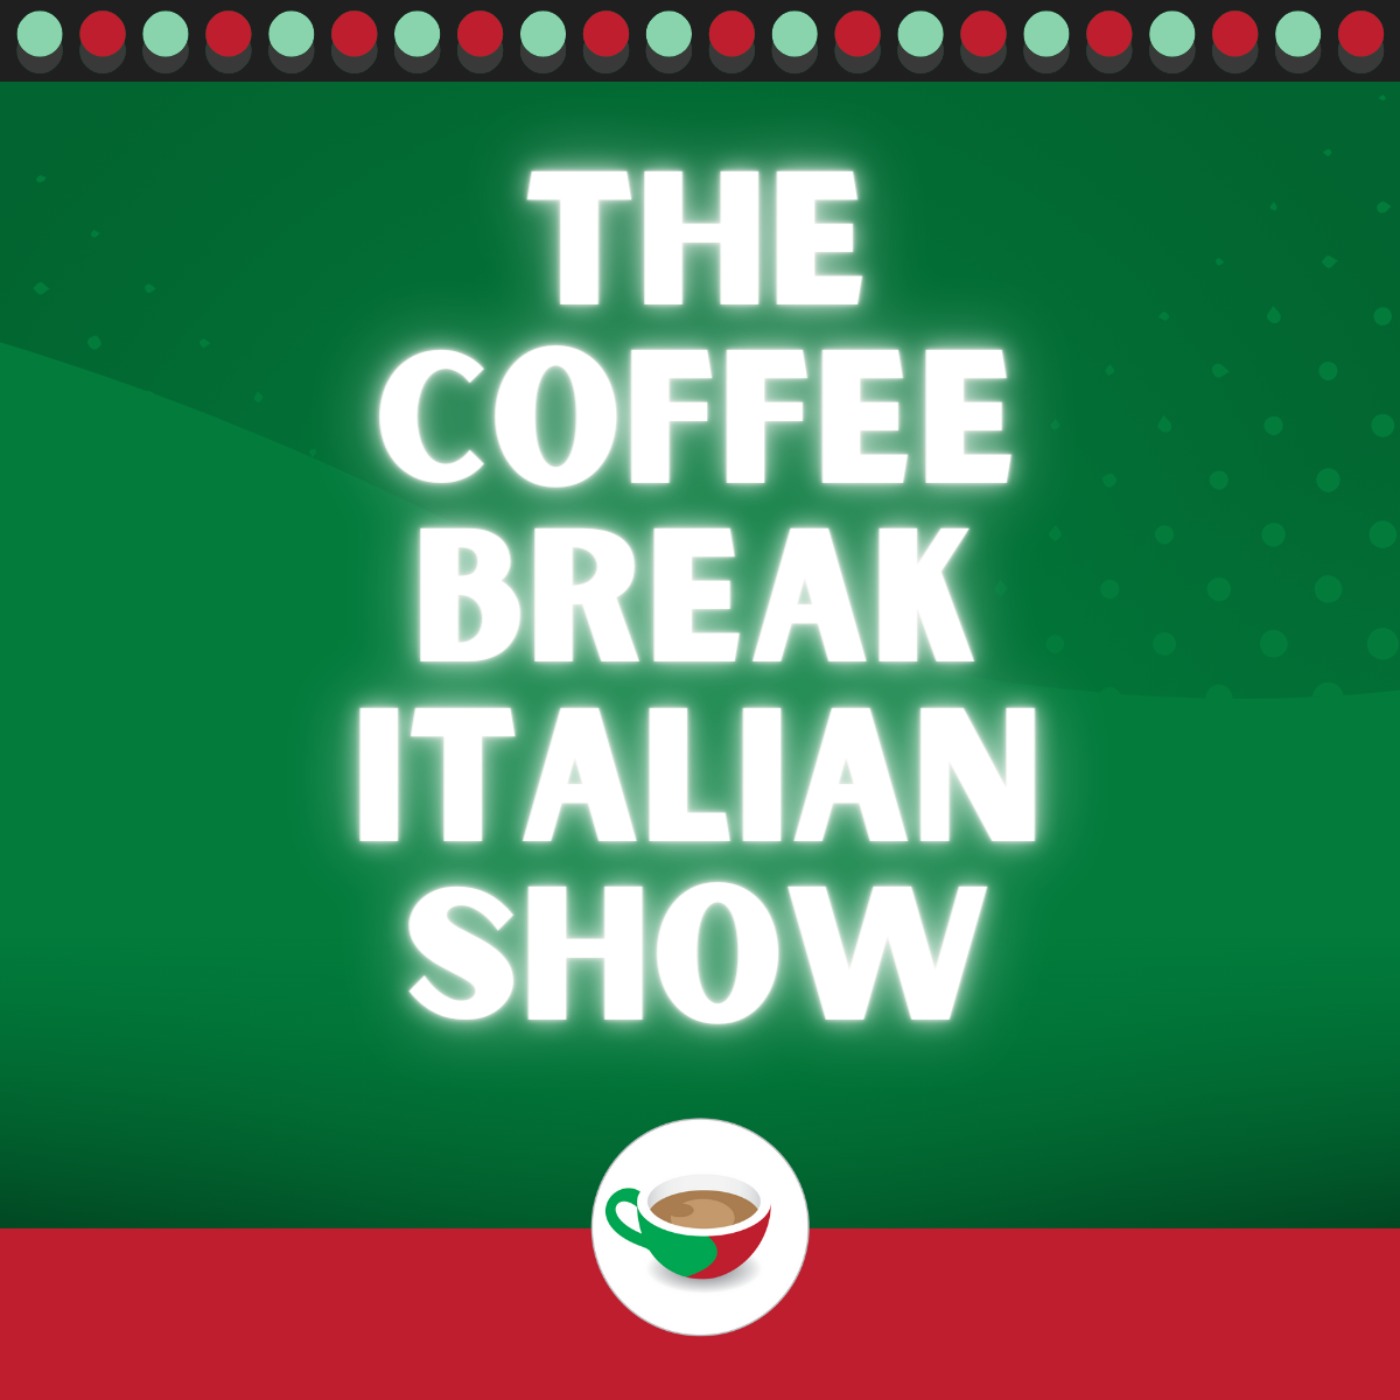 ‘Tu’ and ‘Lei’ - How to navigate informal and formal Italian | The Coffee Break Italian Show 1.01